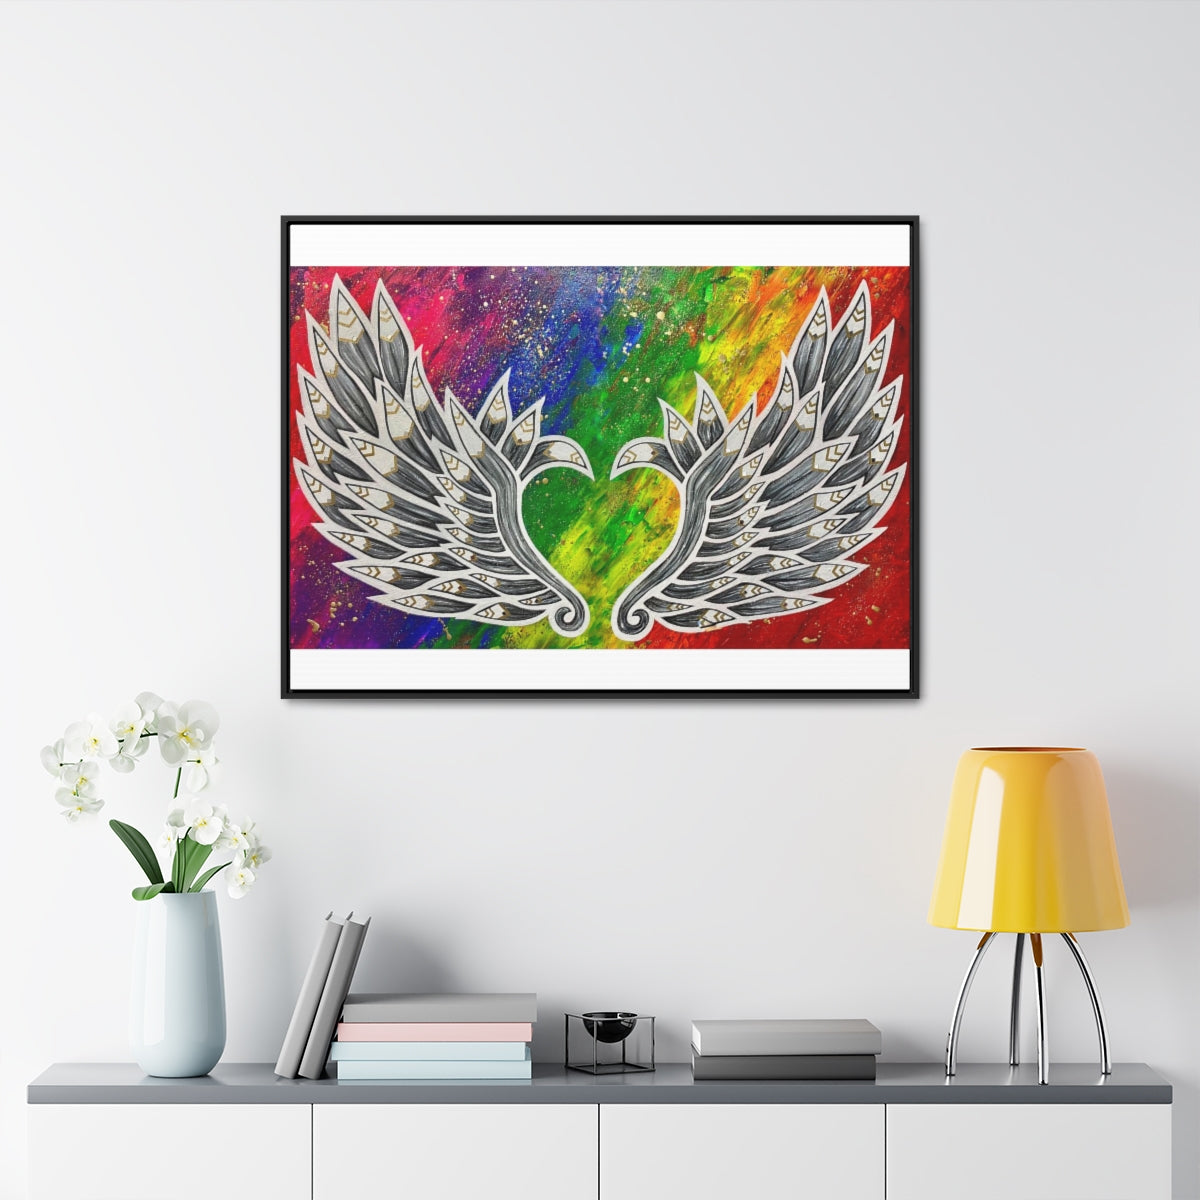 Love Wins Rainbow Heart Angel Wings Horizontal Framed Gallery Wrapped Canvas Art Print